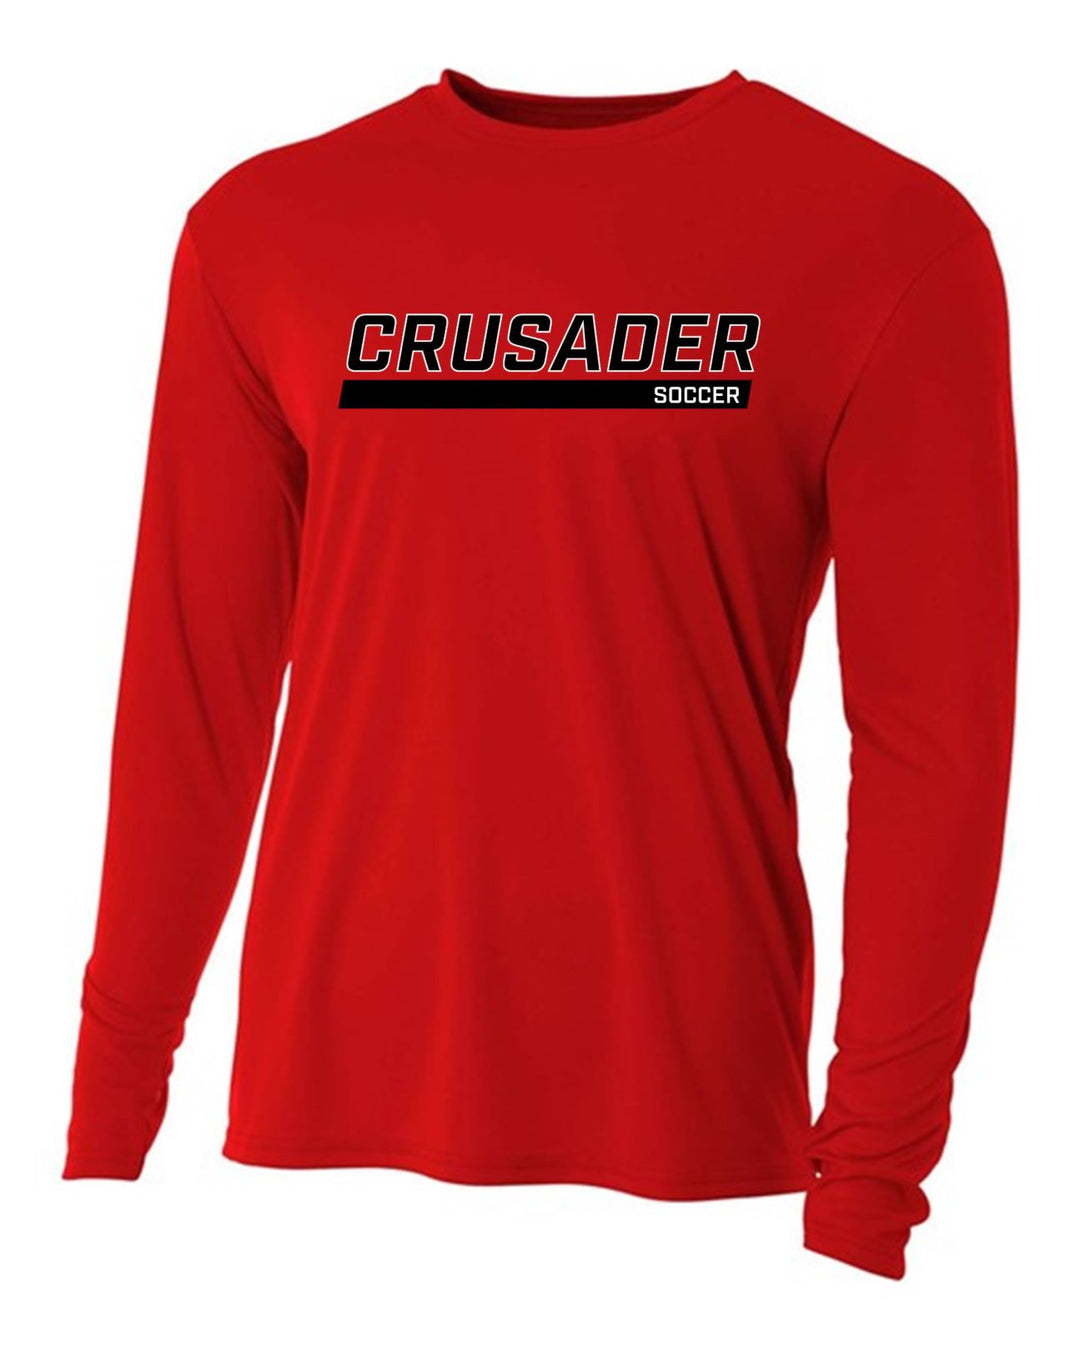 WCU Soccer Men's Long-Sleeve Performance Shirt WCU Soccer Red CRUSADER - Third Coast Soccer